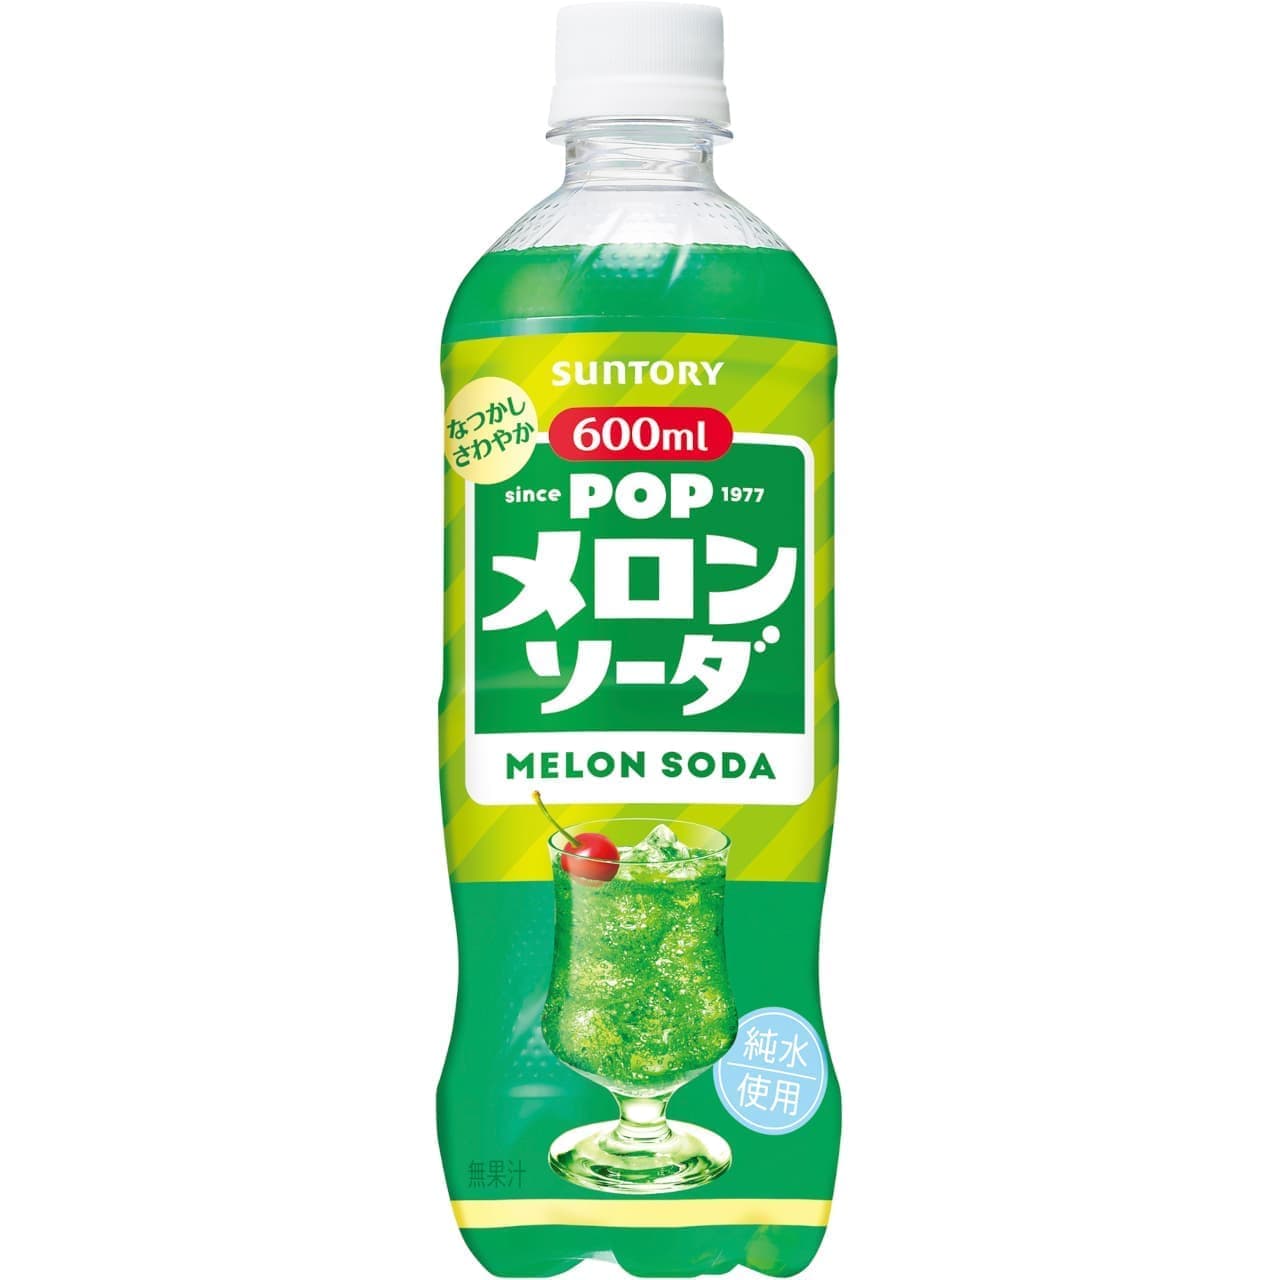 Suntory Foods "POP Melon Soda